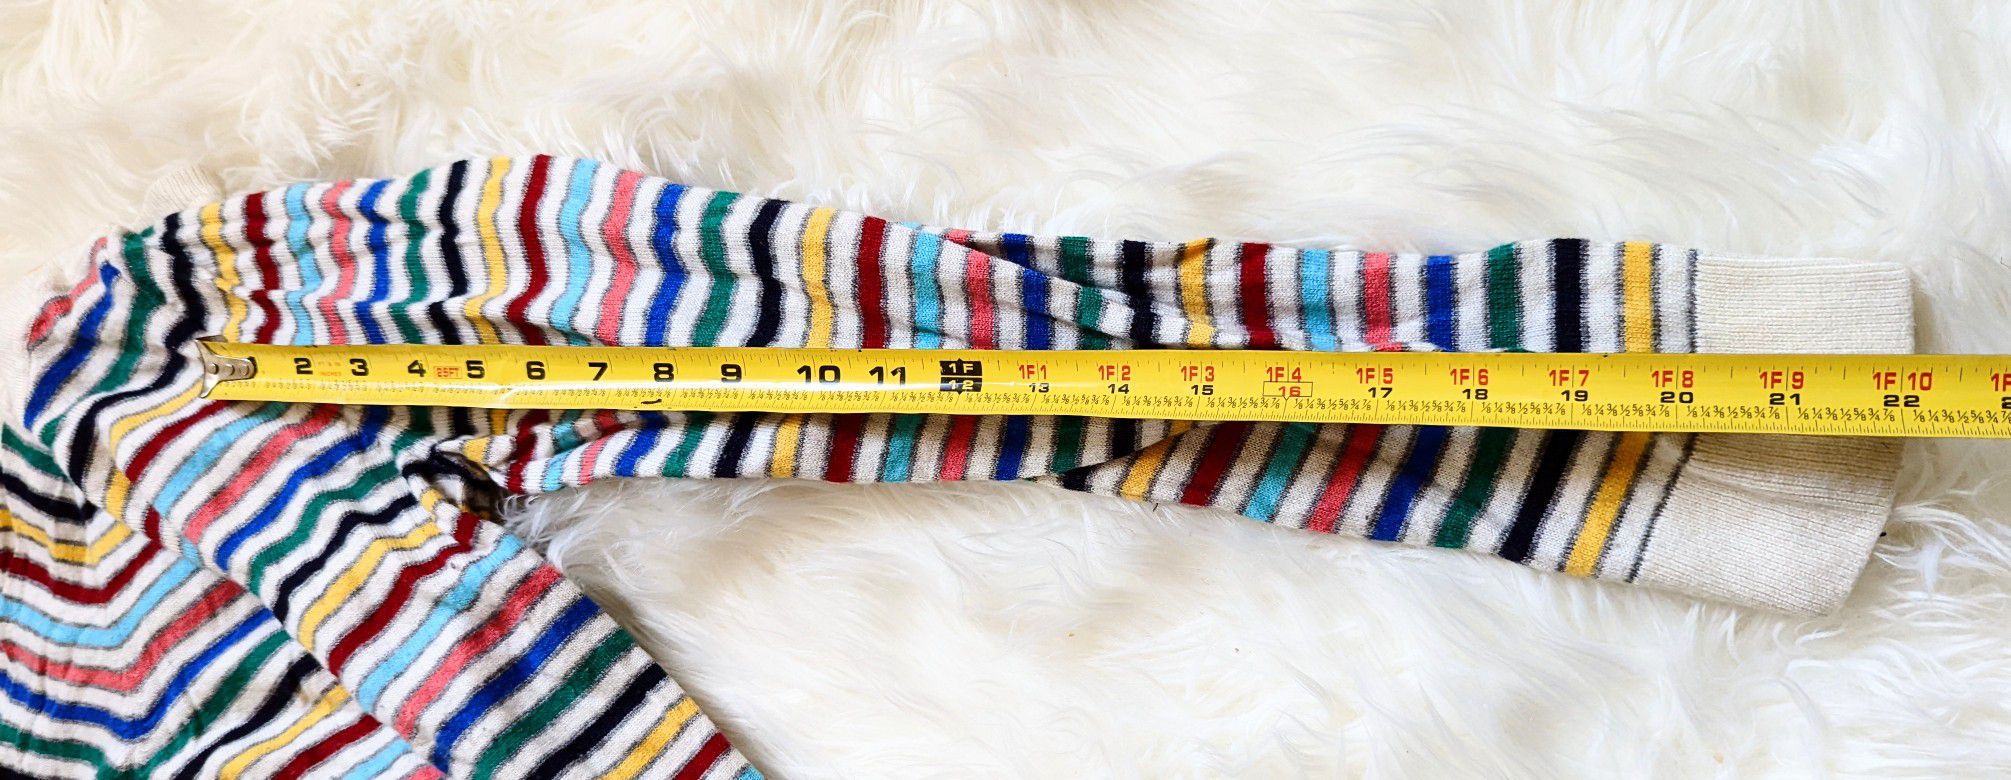 Talbots Women's Striped Long Sleeve Sweater. Cardigan 70% Nylon. Size  L